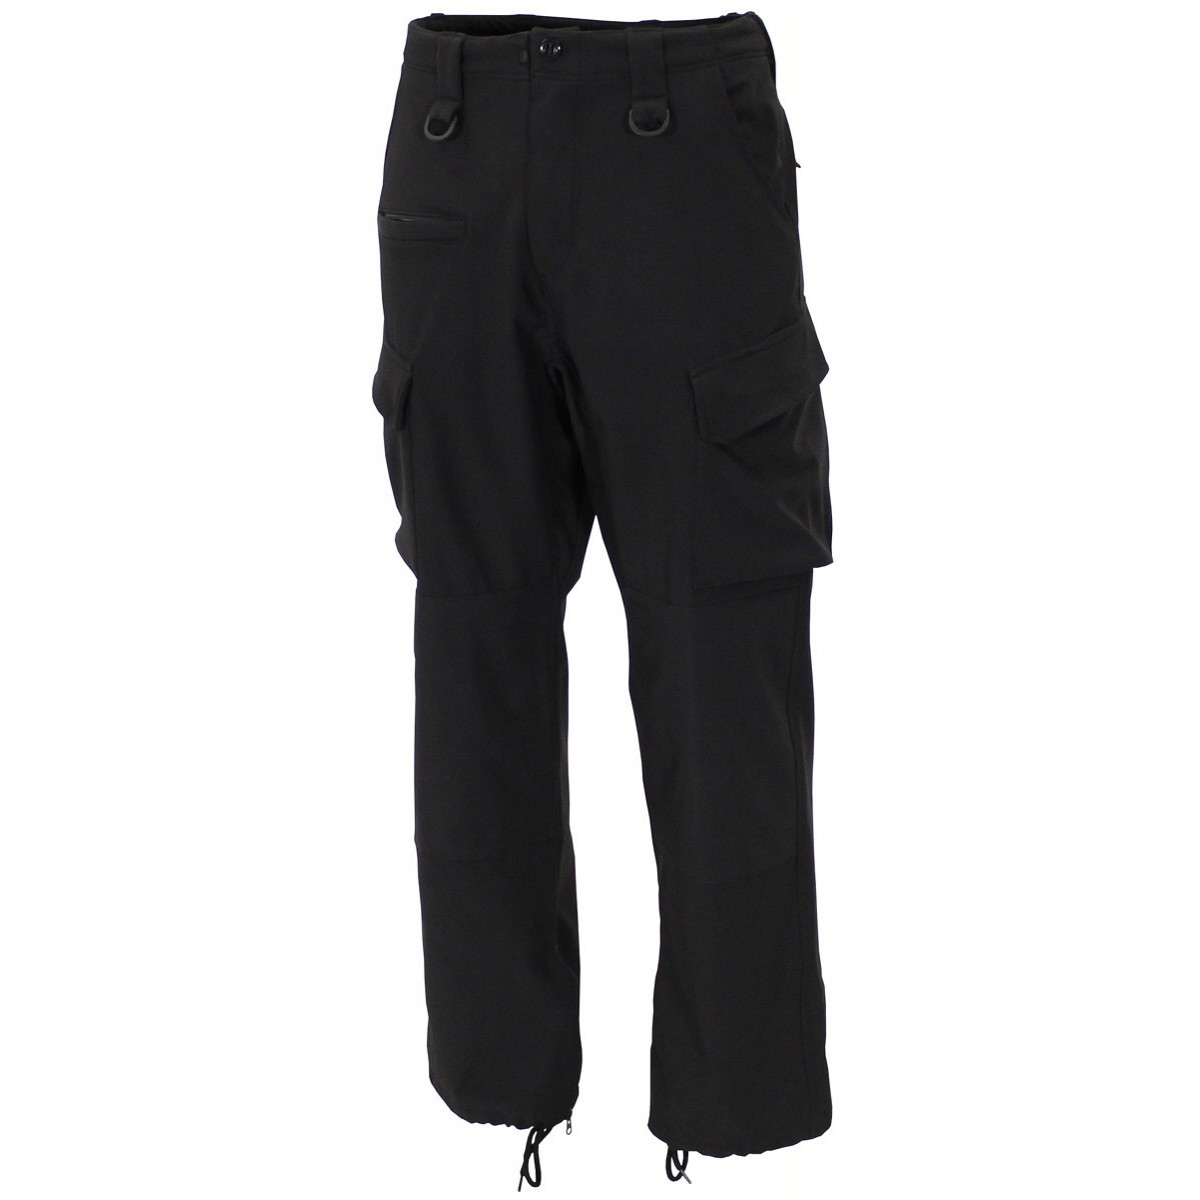 Kalhoty MFH Softshell Allround - černé, S